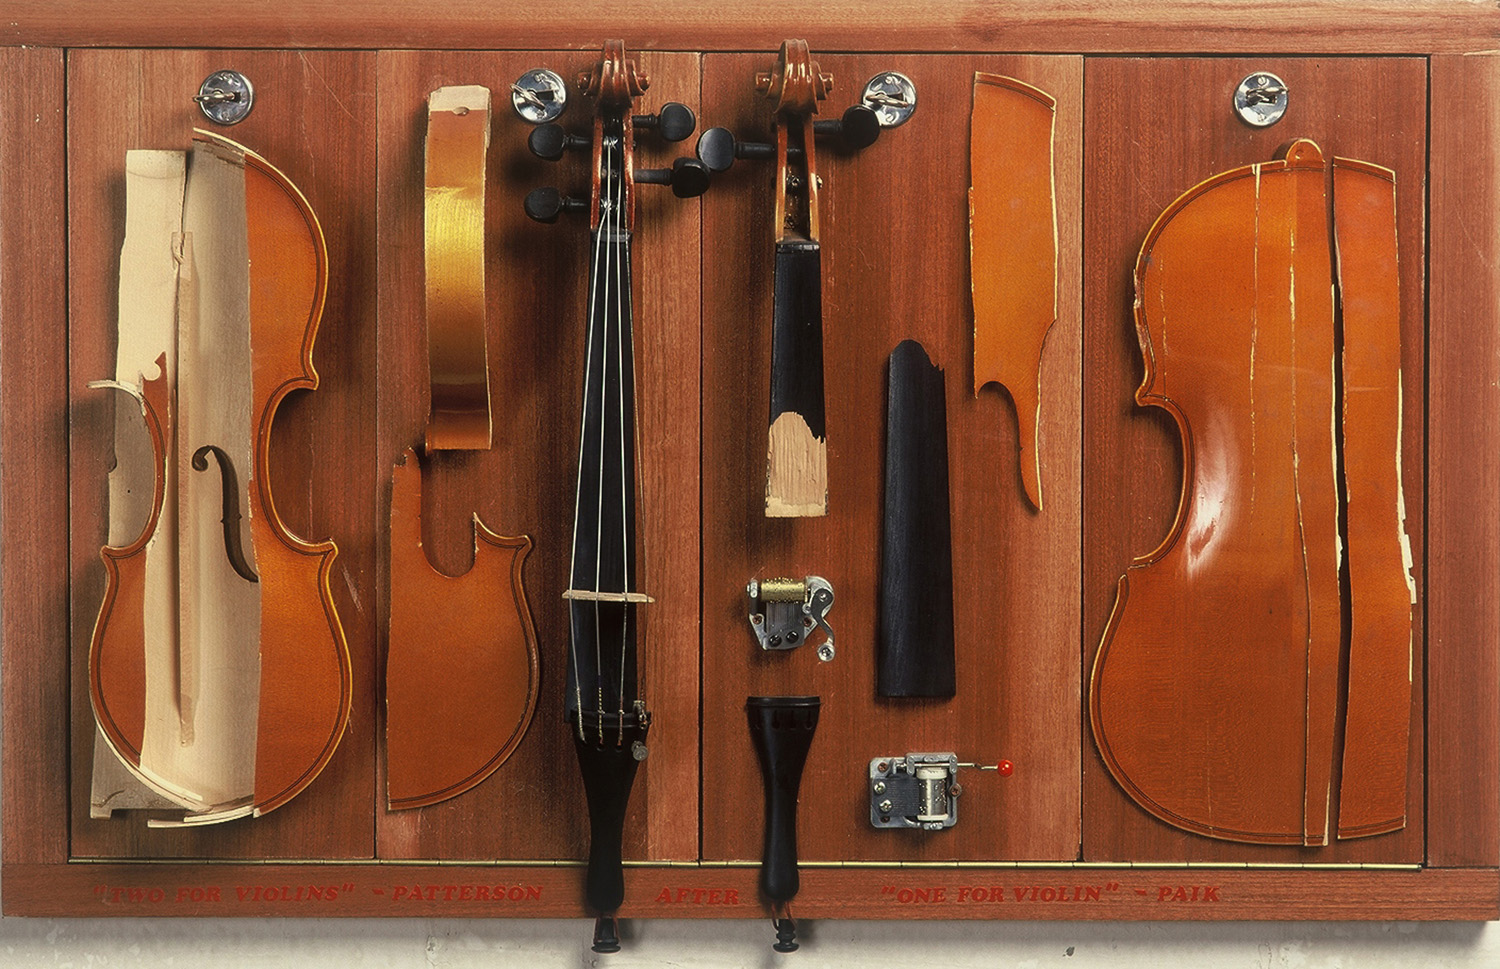 Violins by Nam June Paik,"